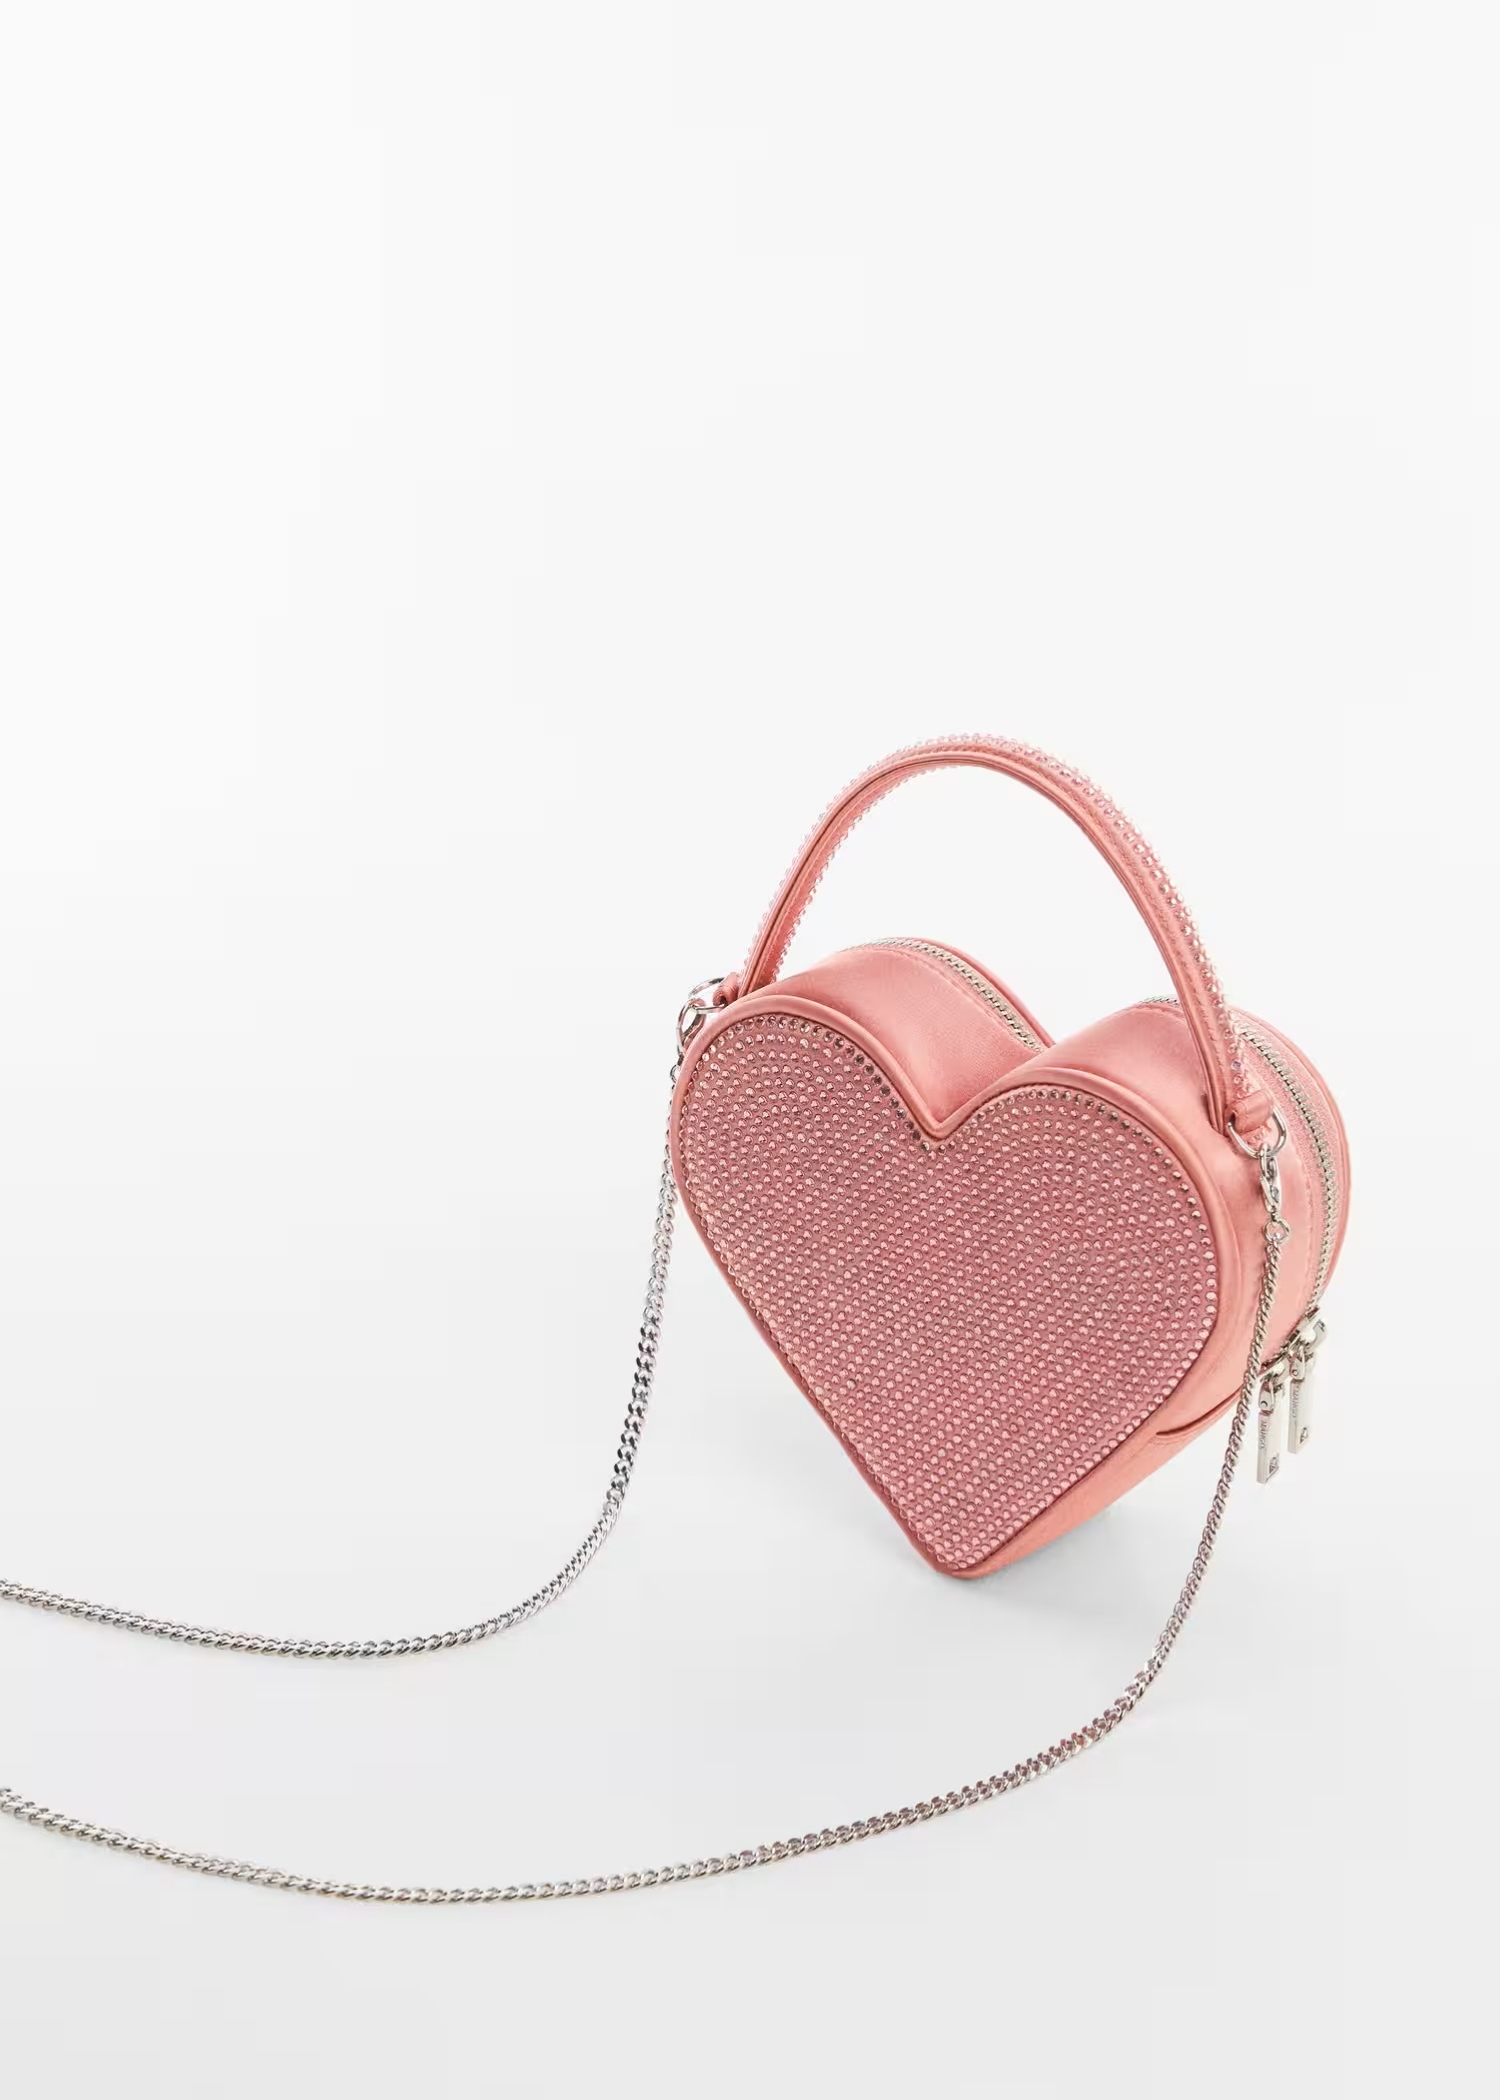 A pink heart-shaped bag.